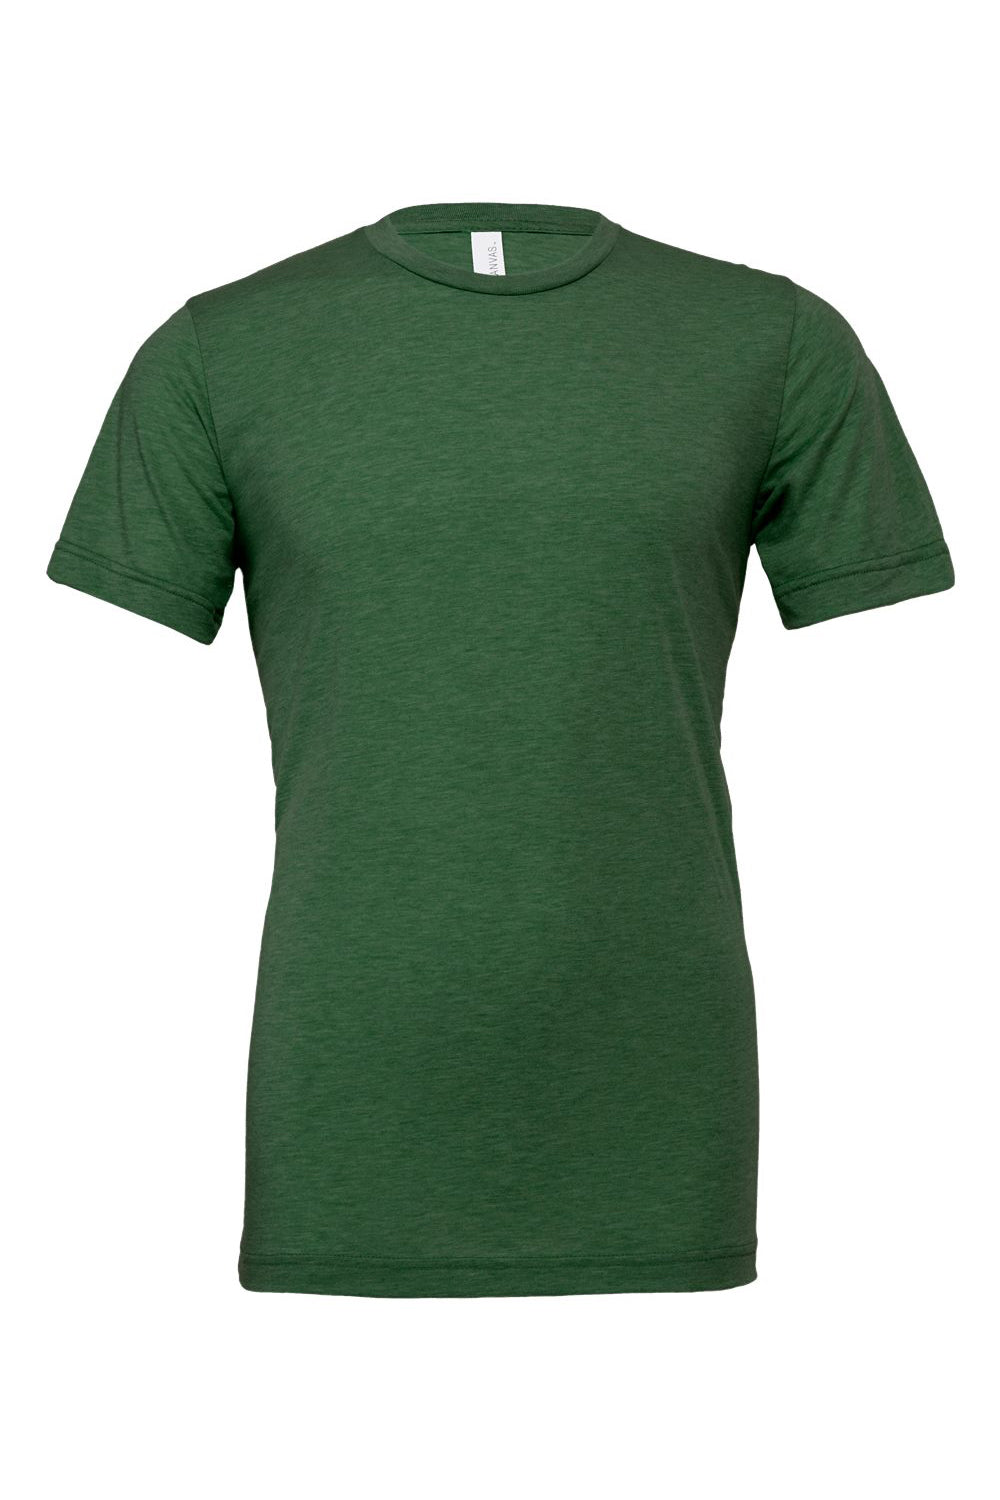 Bella + Canvas BC3413/3413C/3413 Mens Short Sleeve Crewneck T-Shirt Grass Green Flat Front